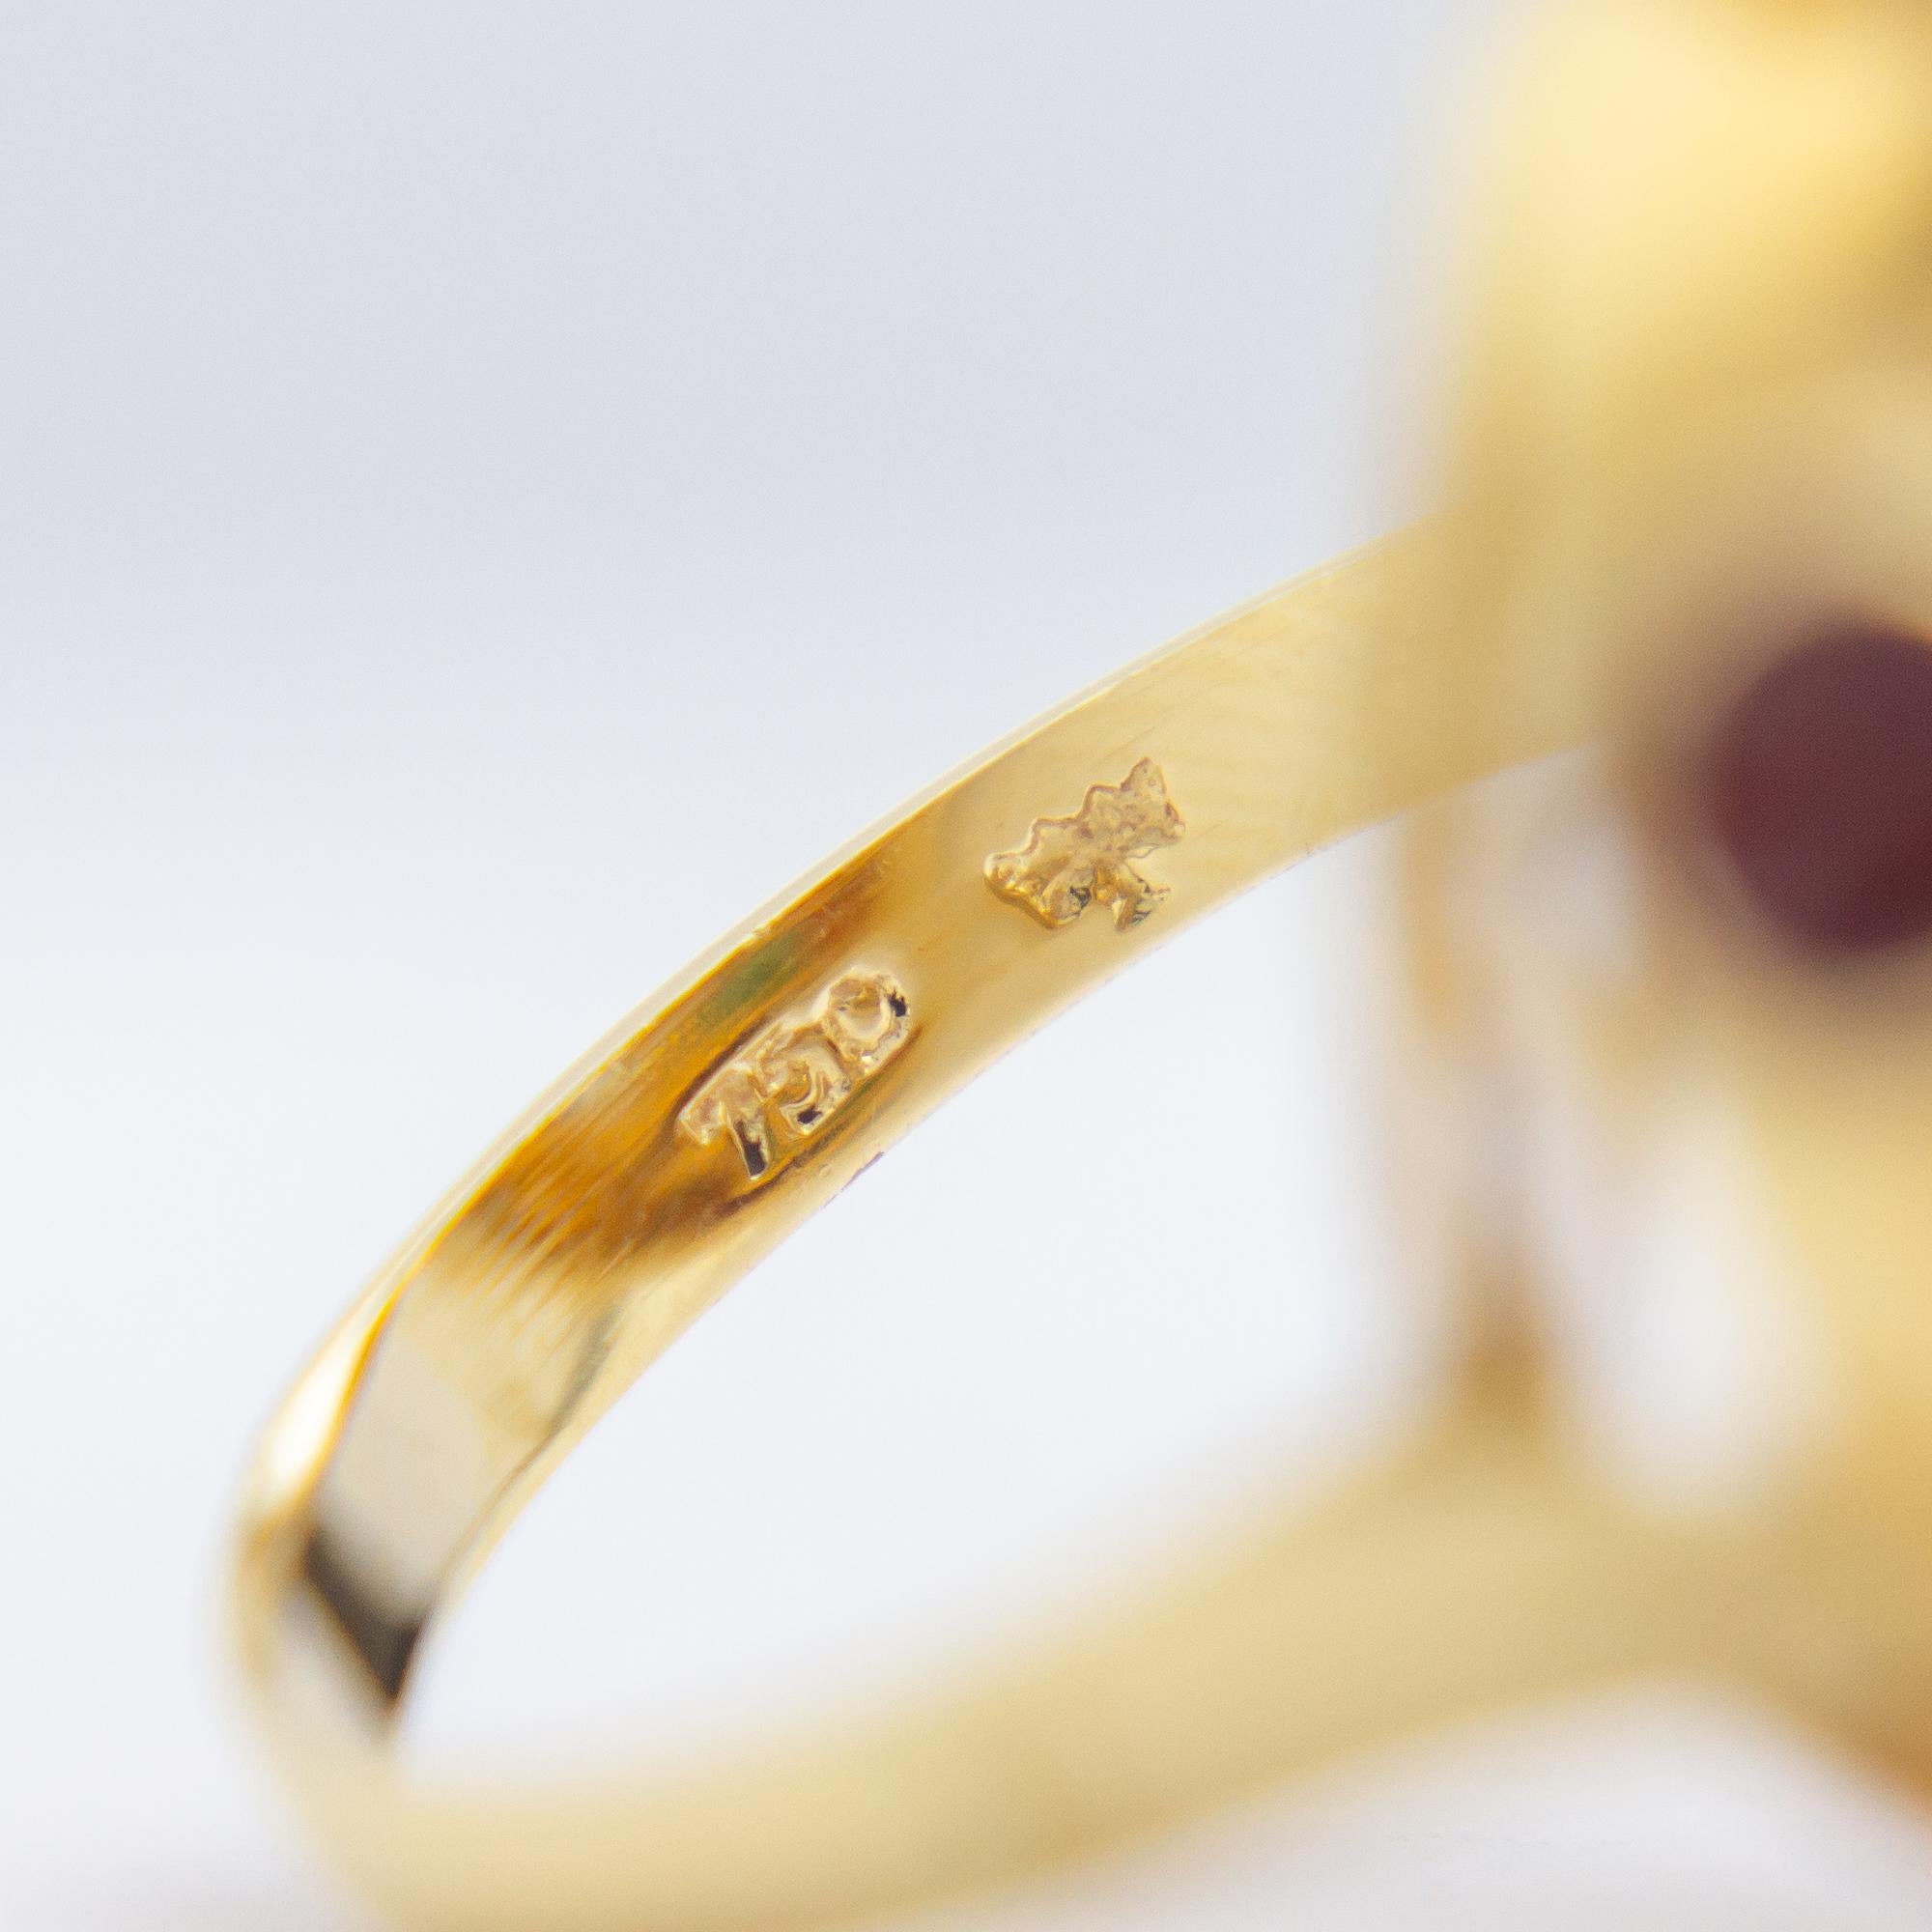 Round Cut 18 Karat Yellow Gold 'Sputnik' Ring by H Stern Set with Semi-Precious Stones